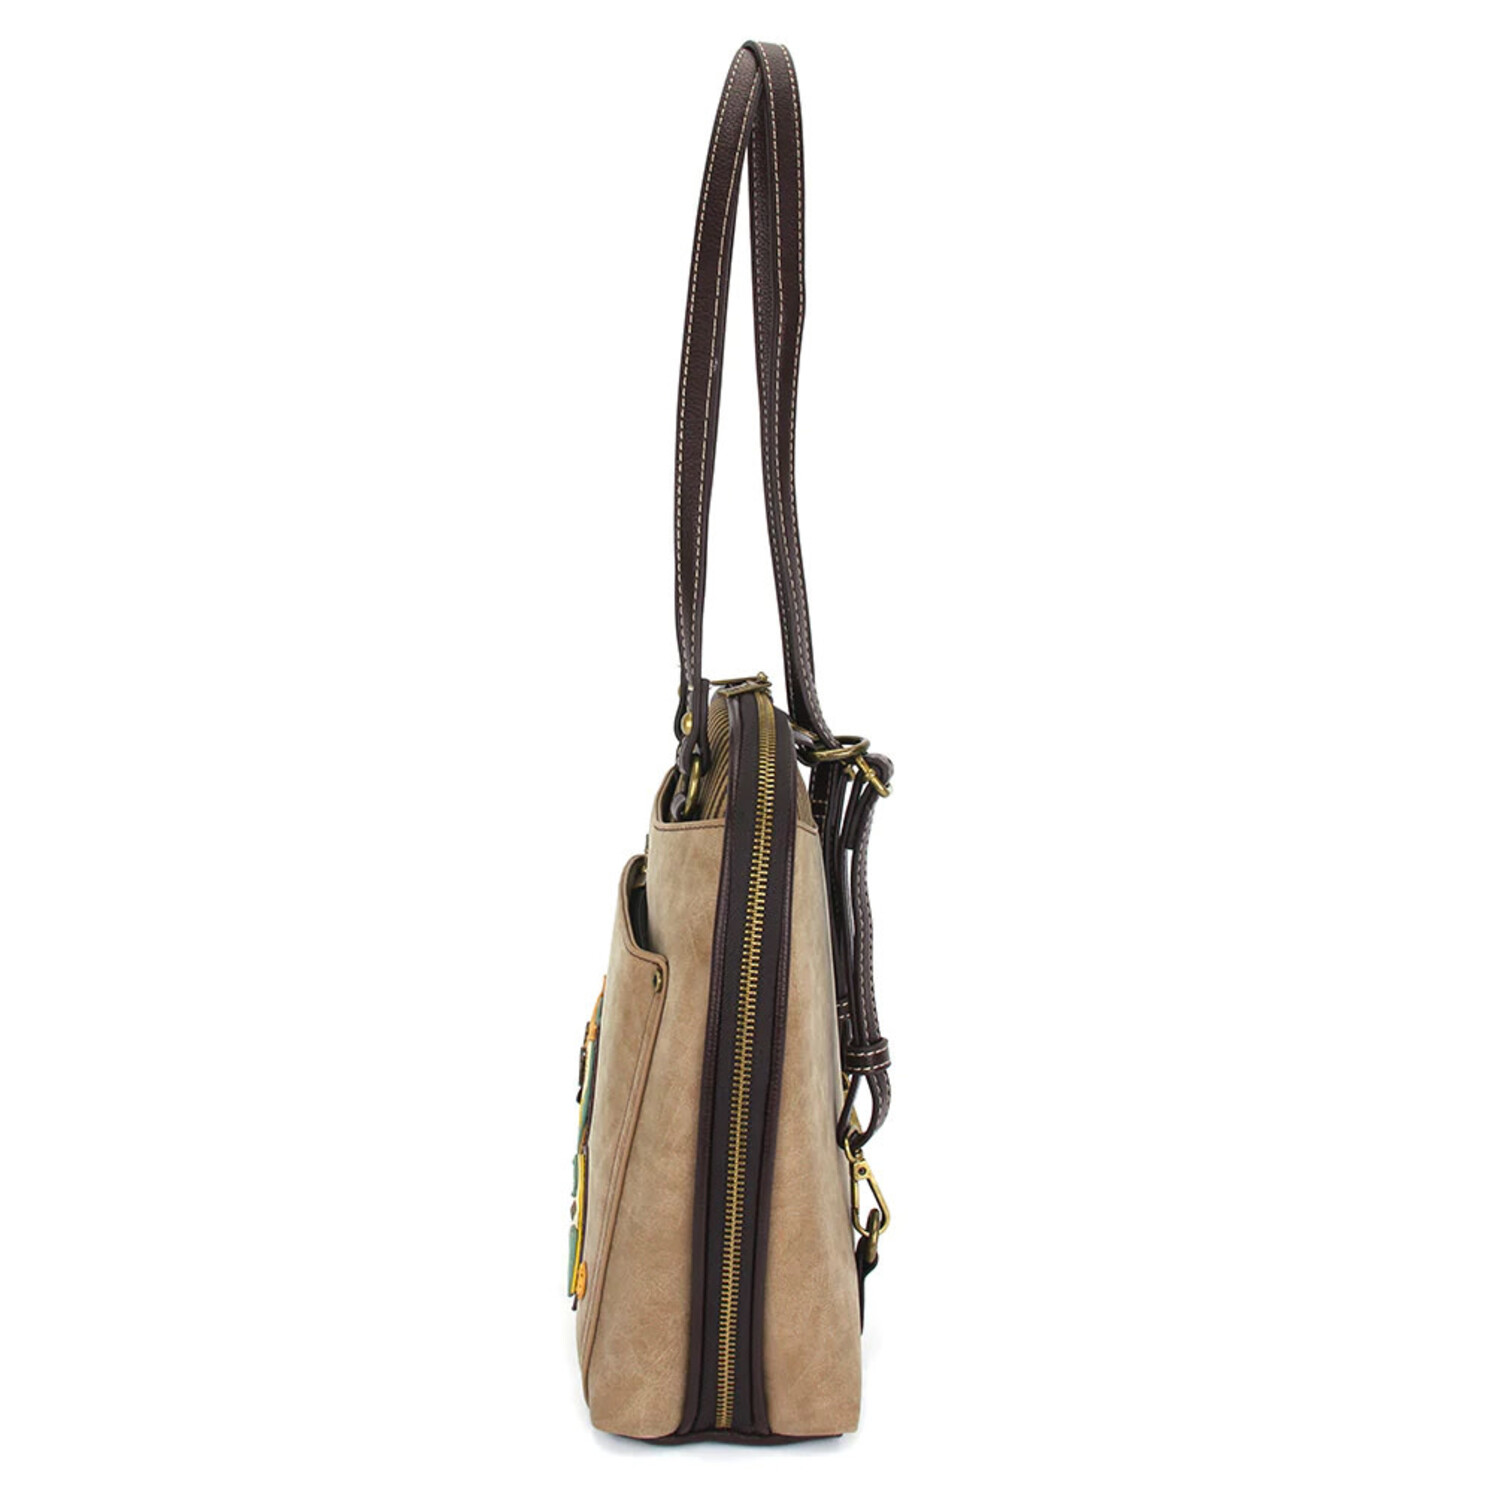 Buy Multifunctional Canvas Bag, JOSEKO Women Convertible Backpack Purse  Ladies Shoulder Bag Casual Handbag at Amazon.in